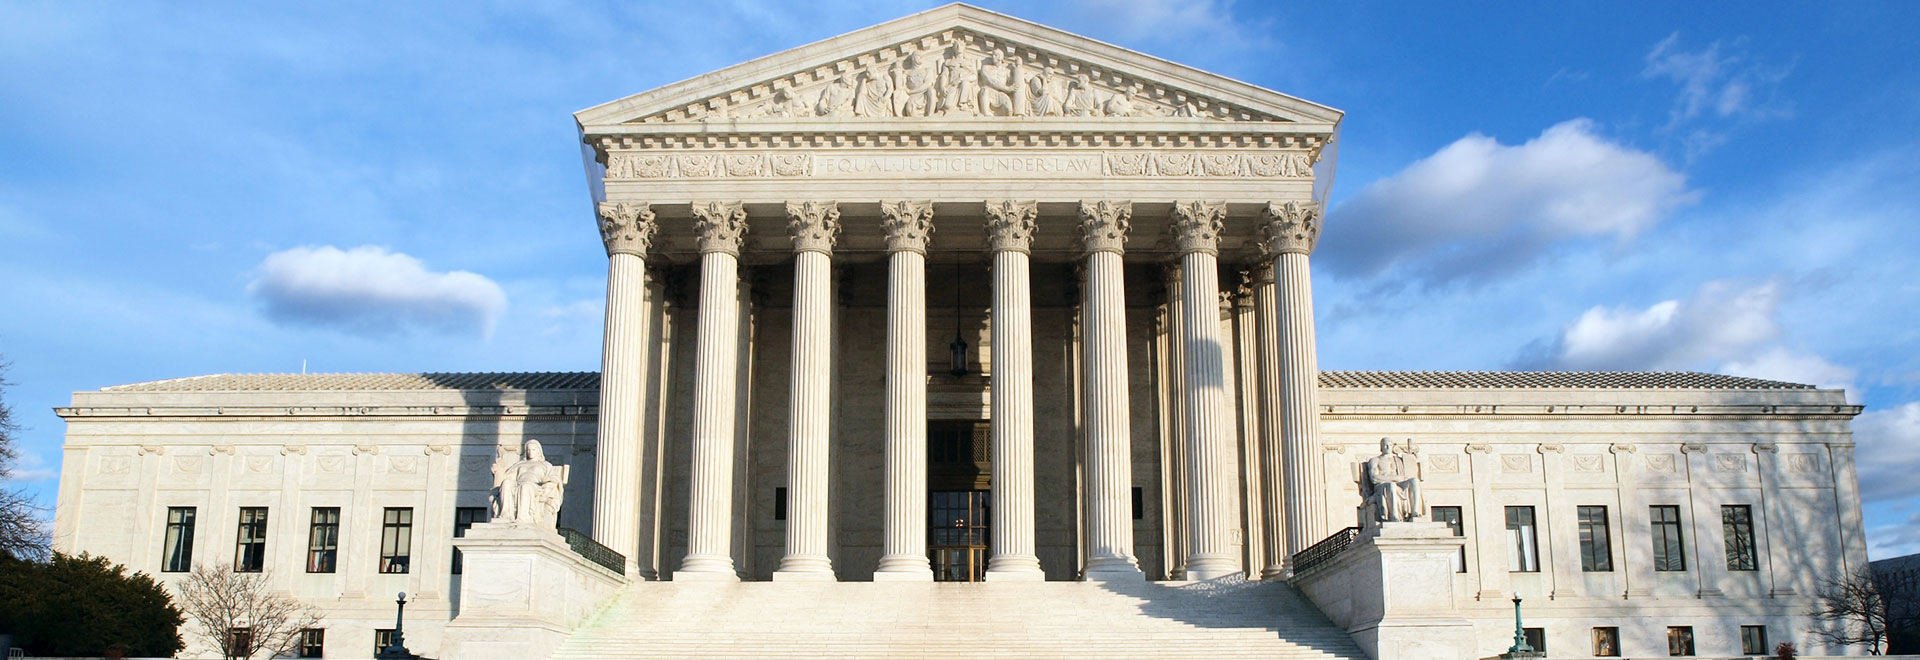 Supreme Court House